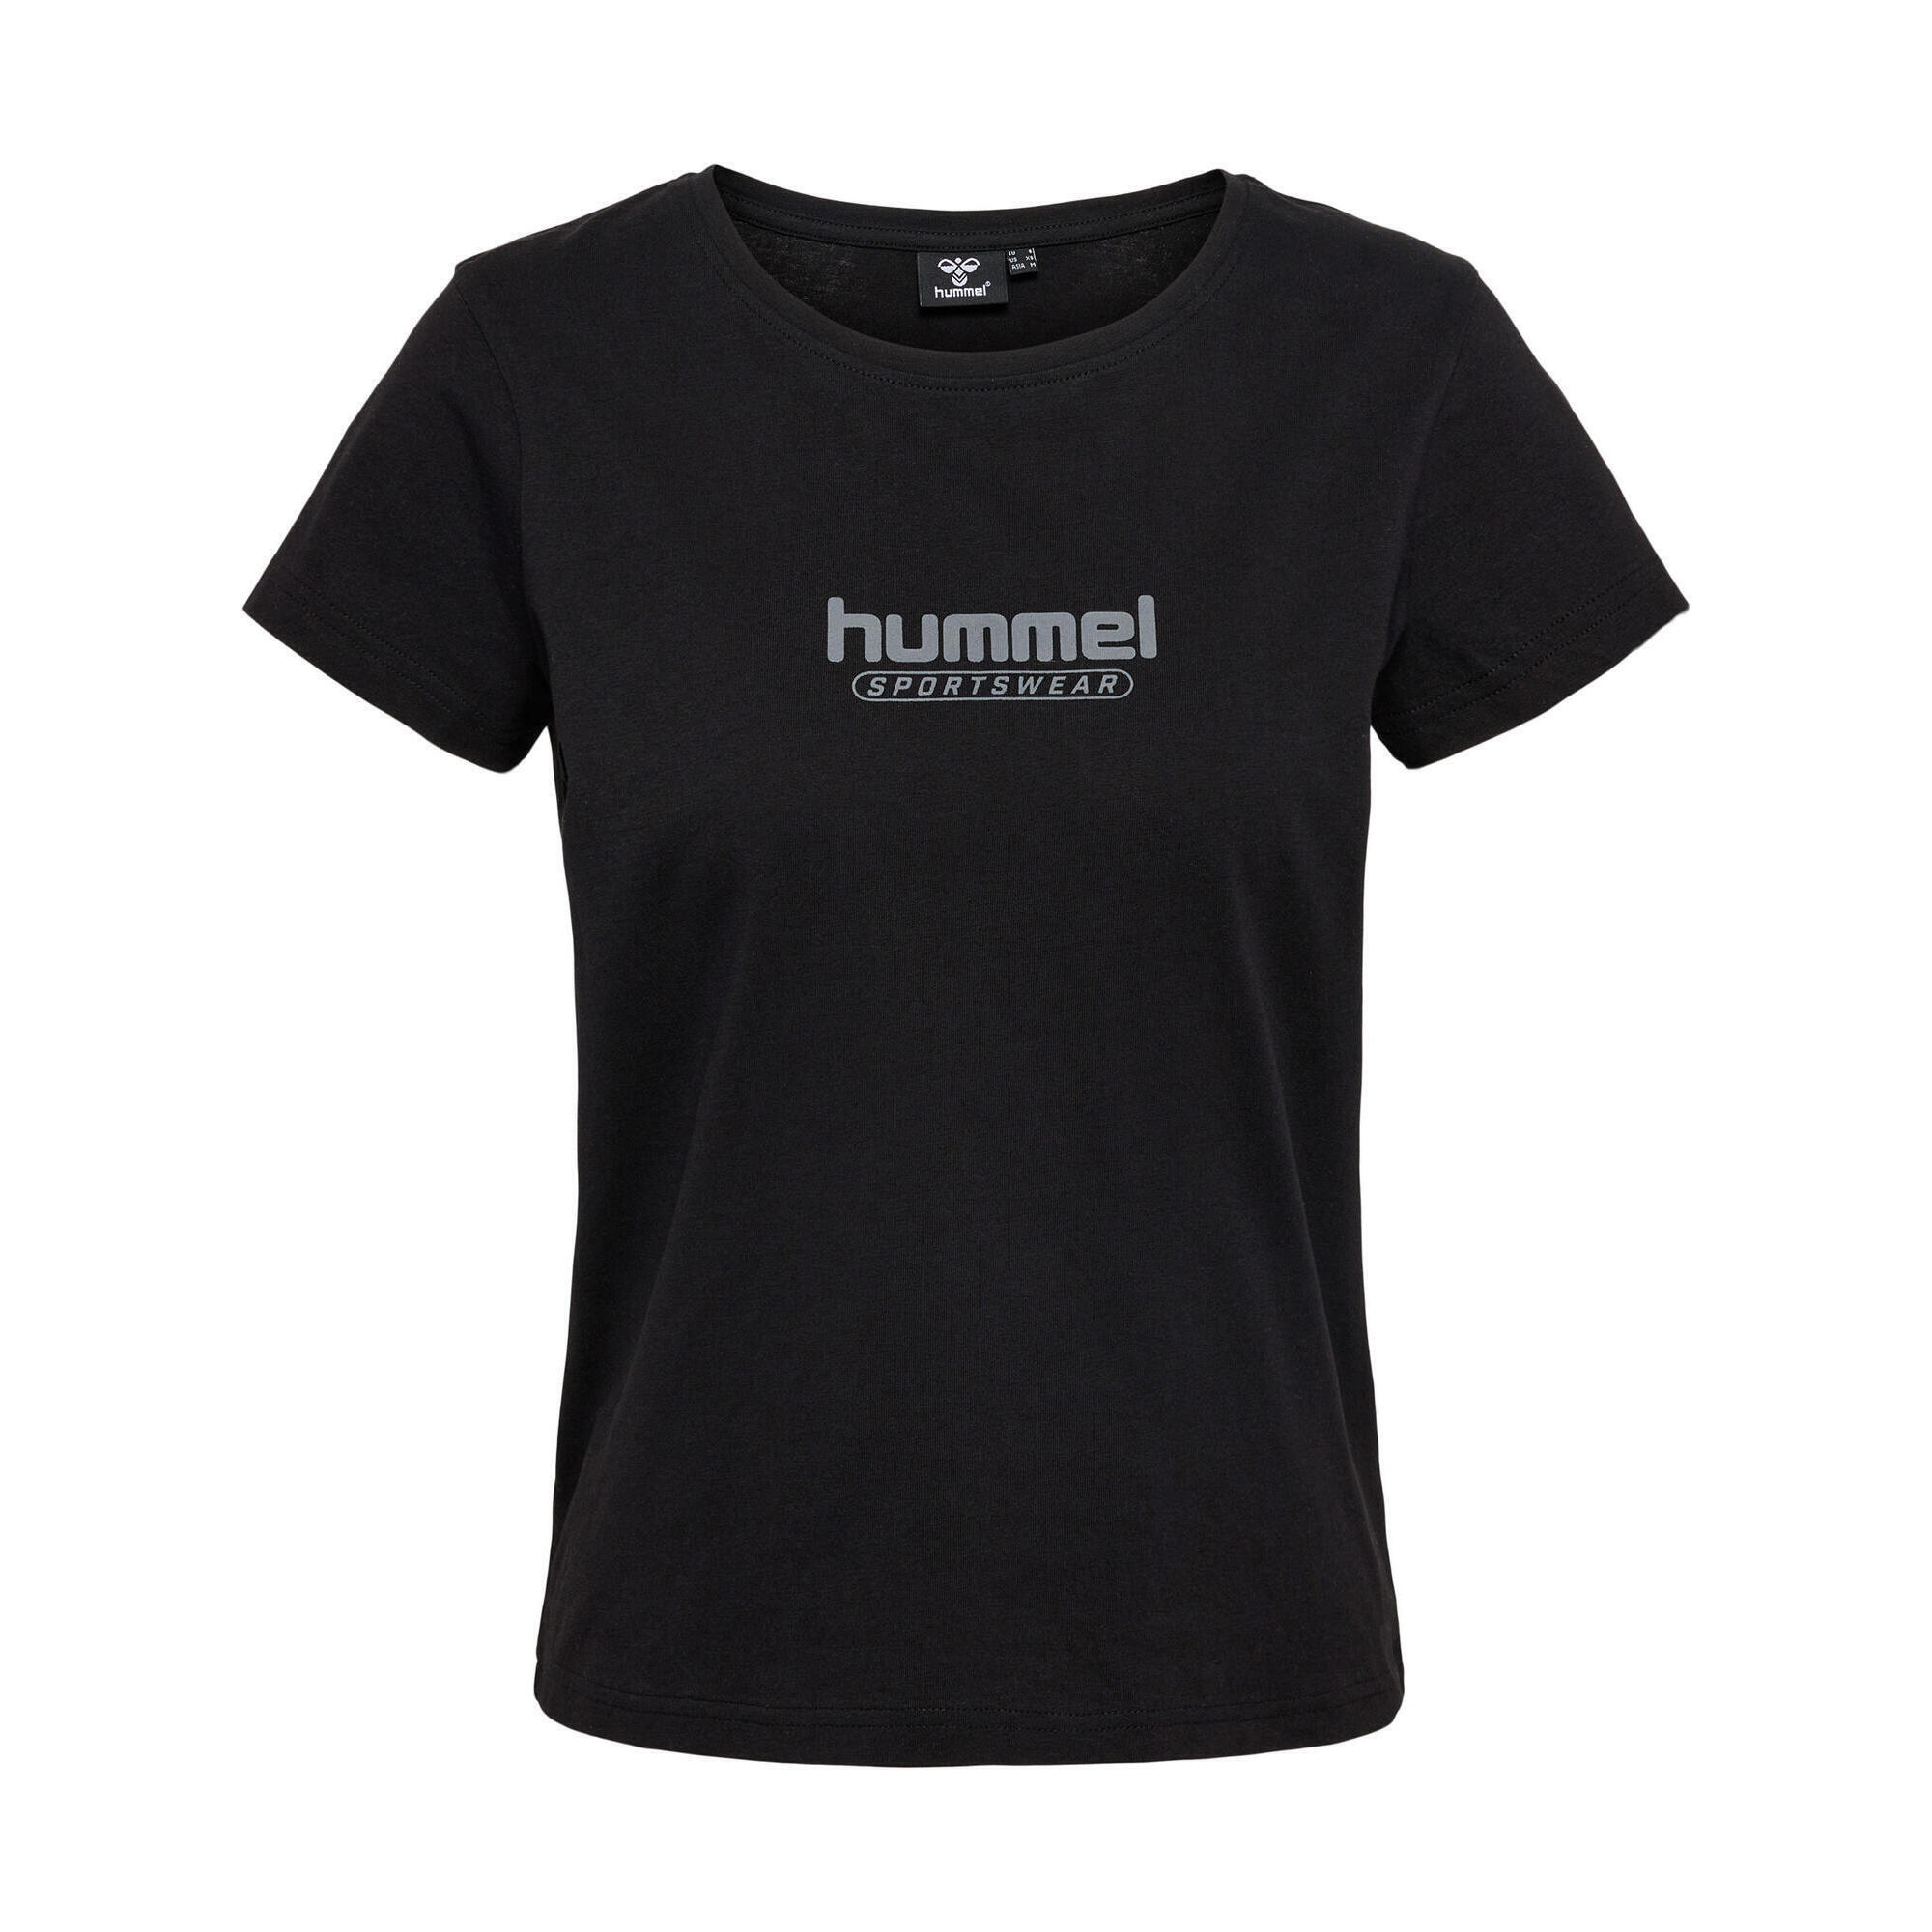 Hmlbooster Женская футболка Футболка S/S Ladies HUMMEL, черный футболка женская ladies american u темно синяя размер s